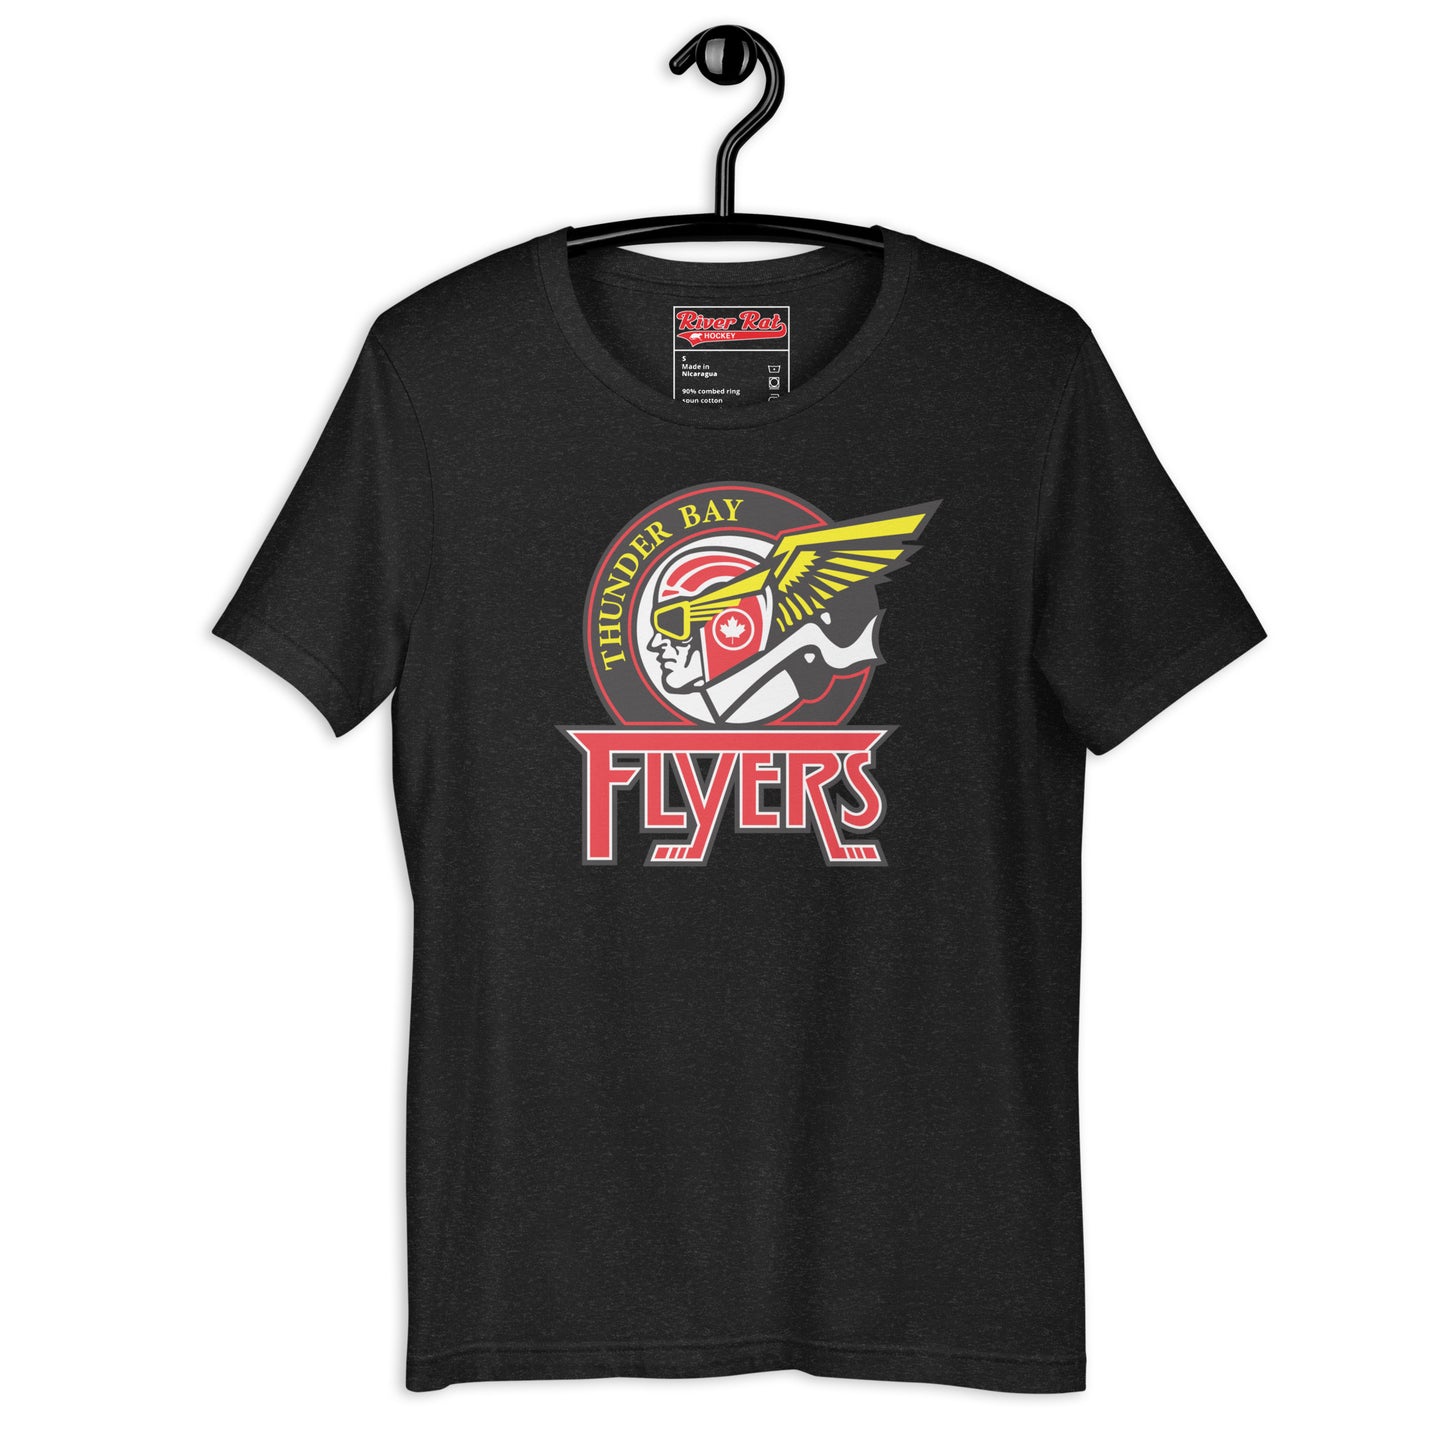 Thunder Bay Flyers Vintage Shirt